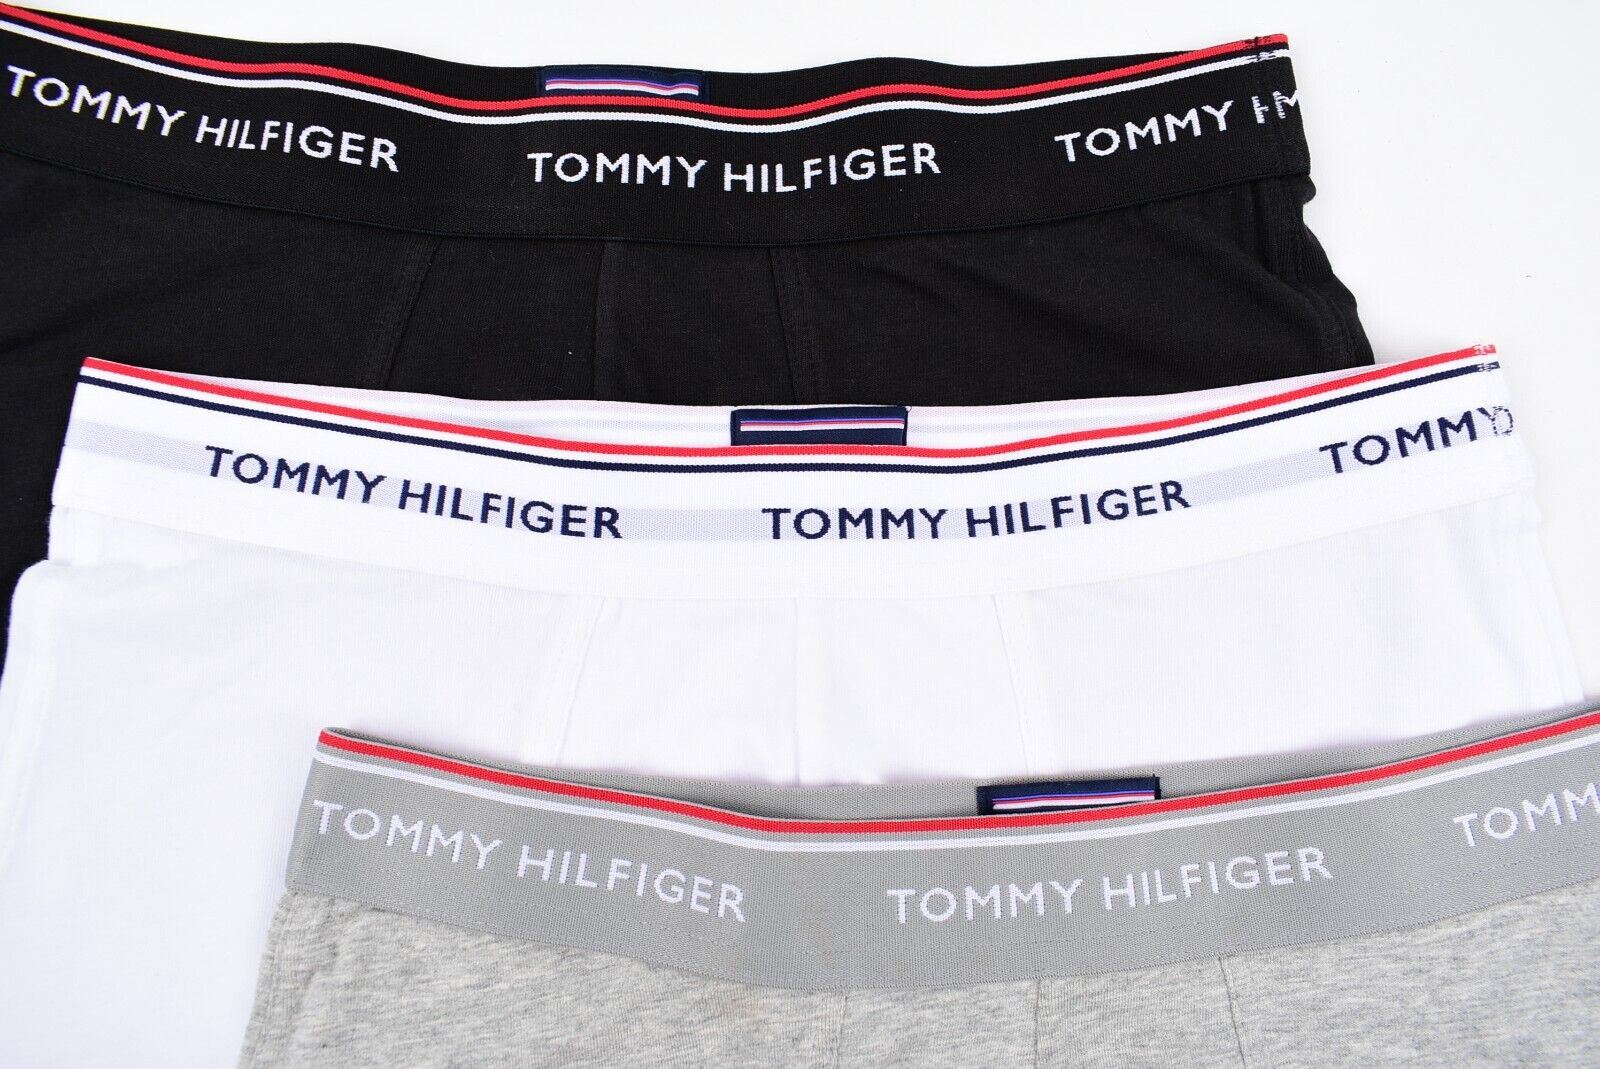 TOMMY HILFIGER Men's 3-pk Boxer Trunks, Black/Grey/White, size S *damaged box*